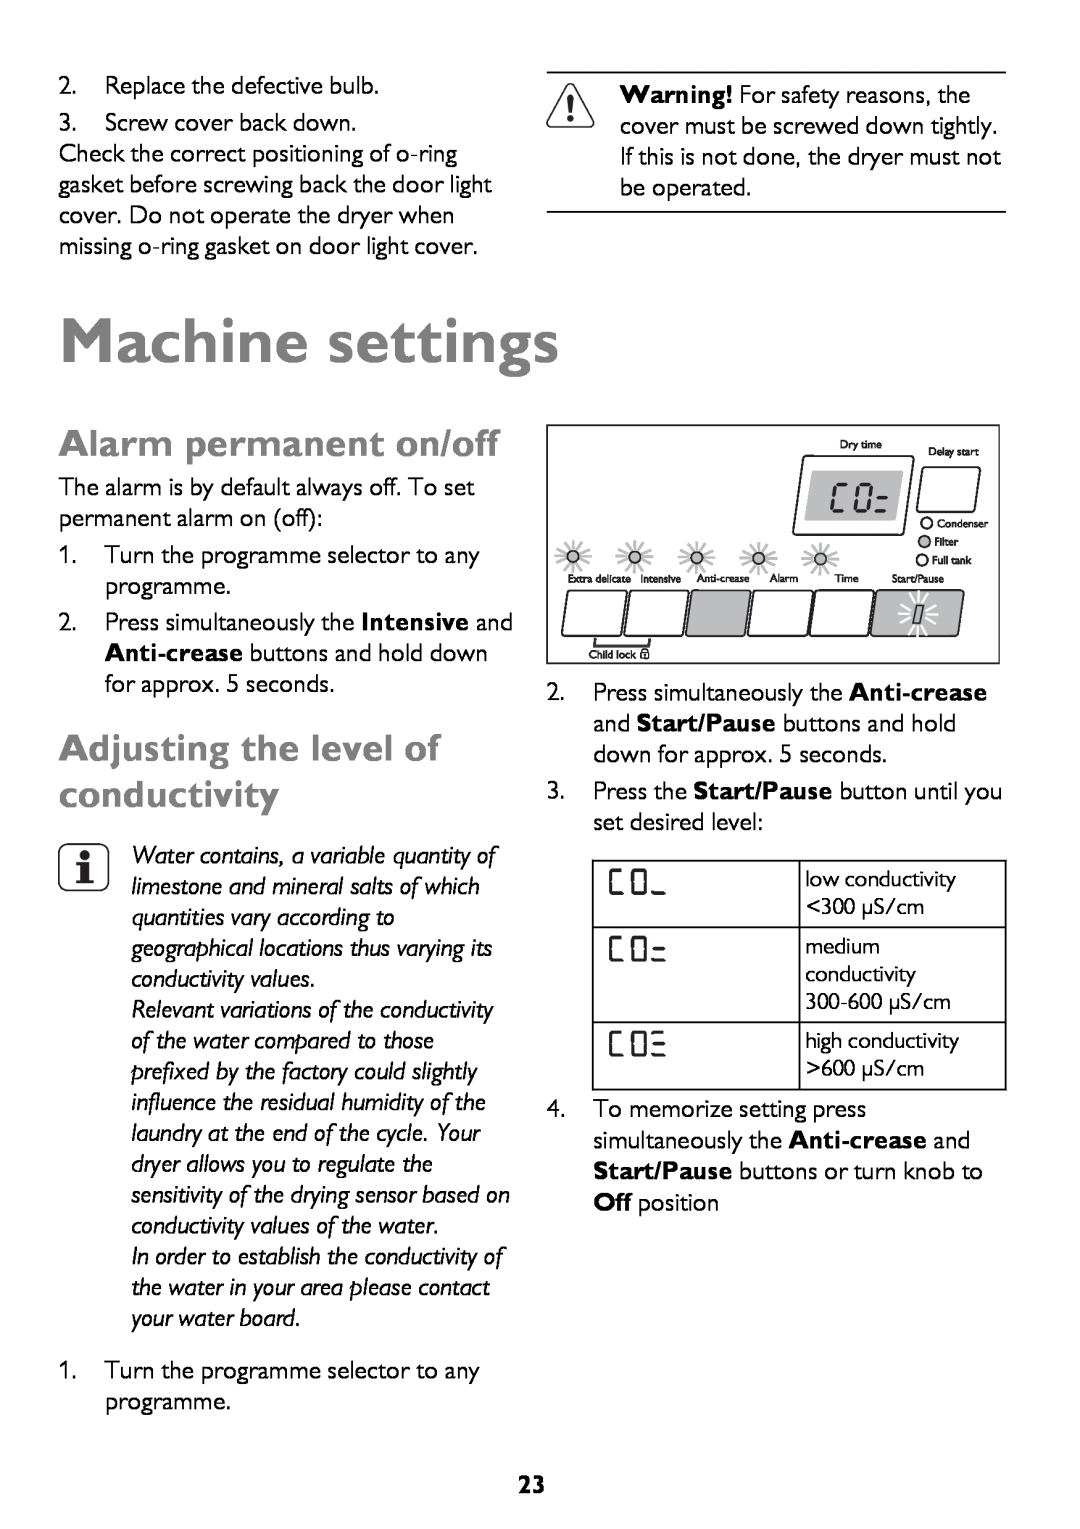 John Lewis JLTDH15 instruction manual Machine settings, Alarm permanent on/off, Adjusting the level of conductivity 